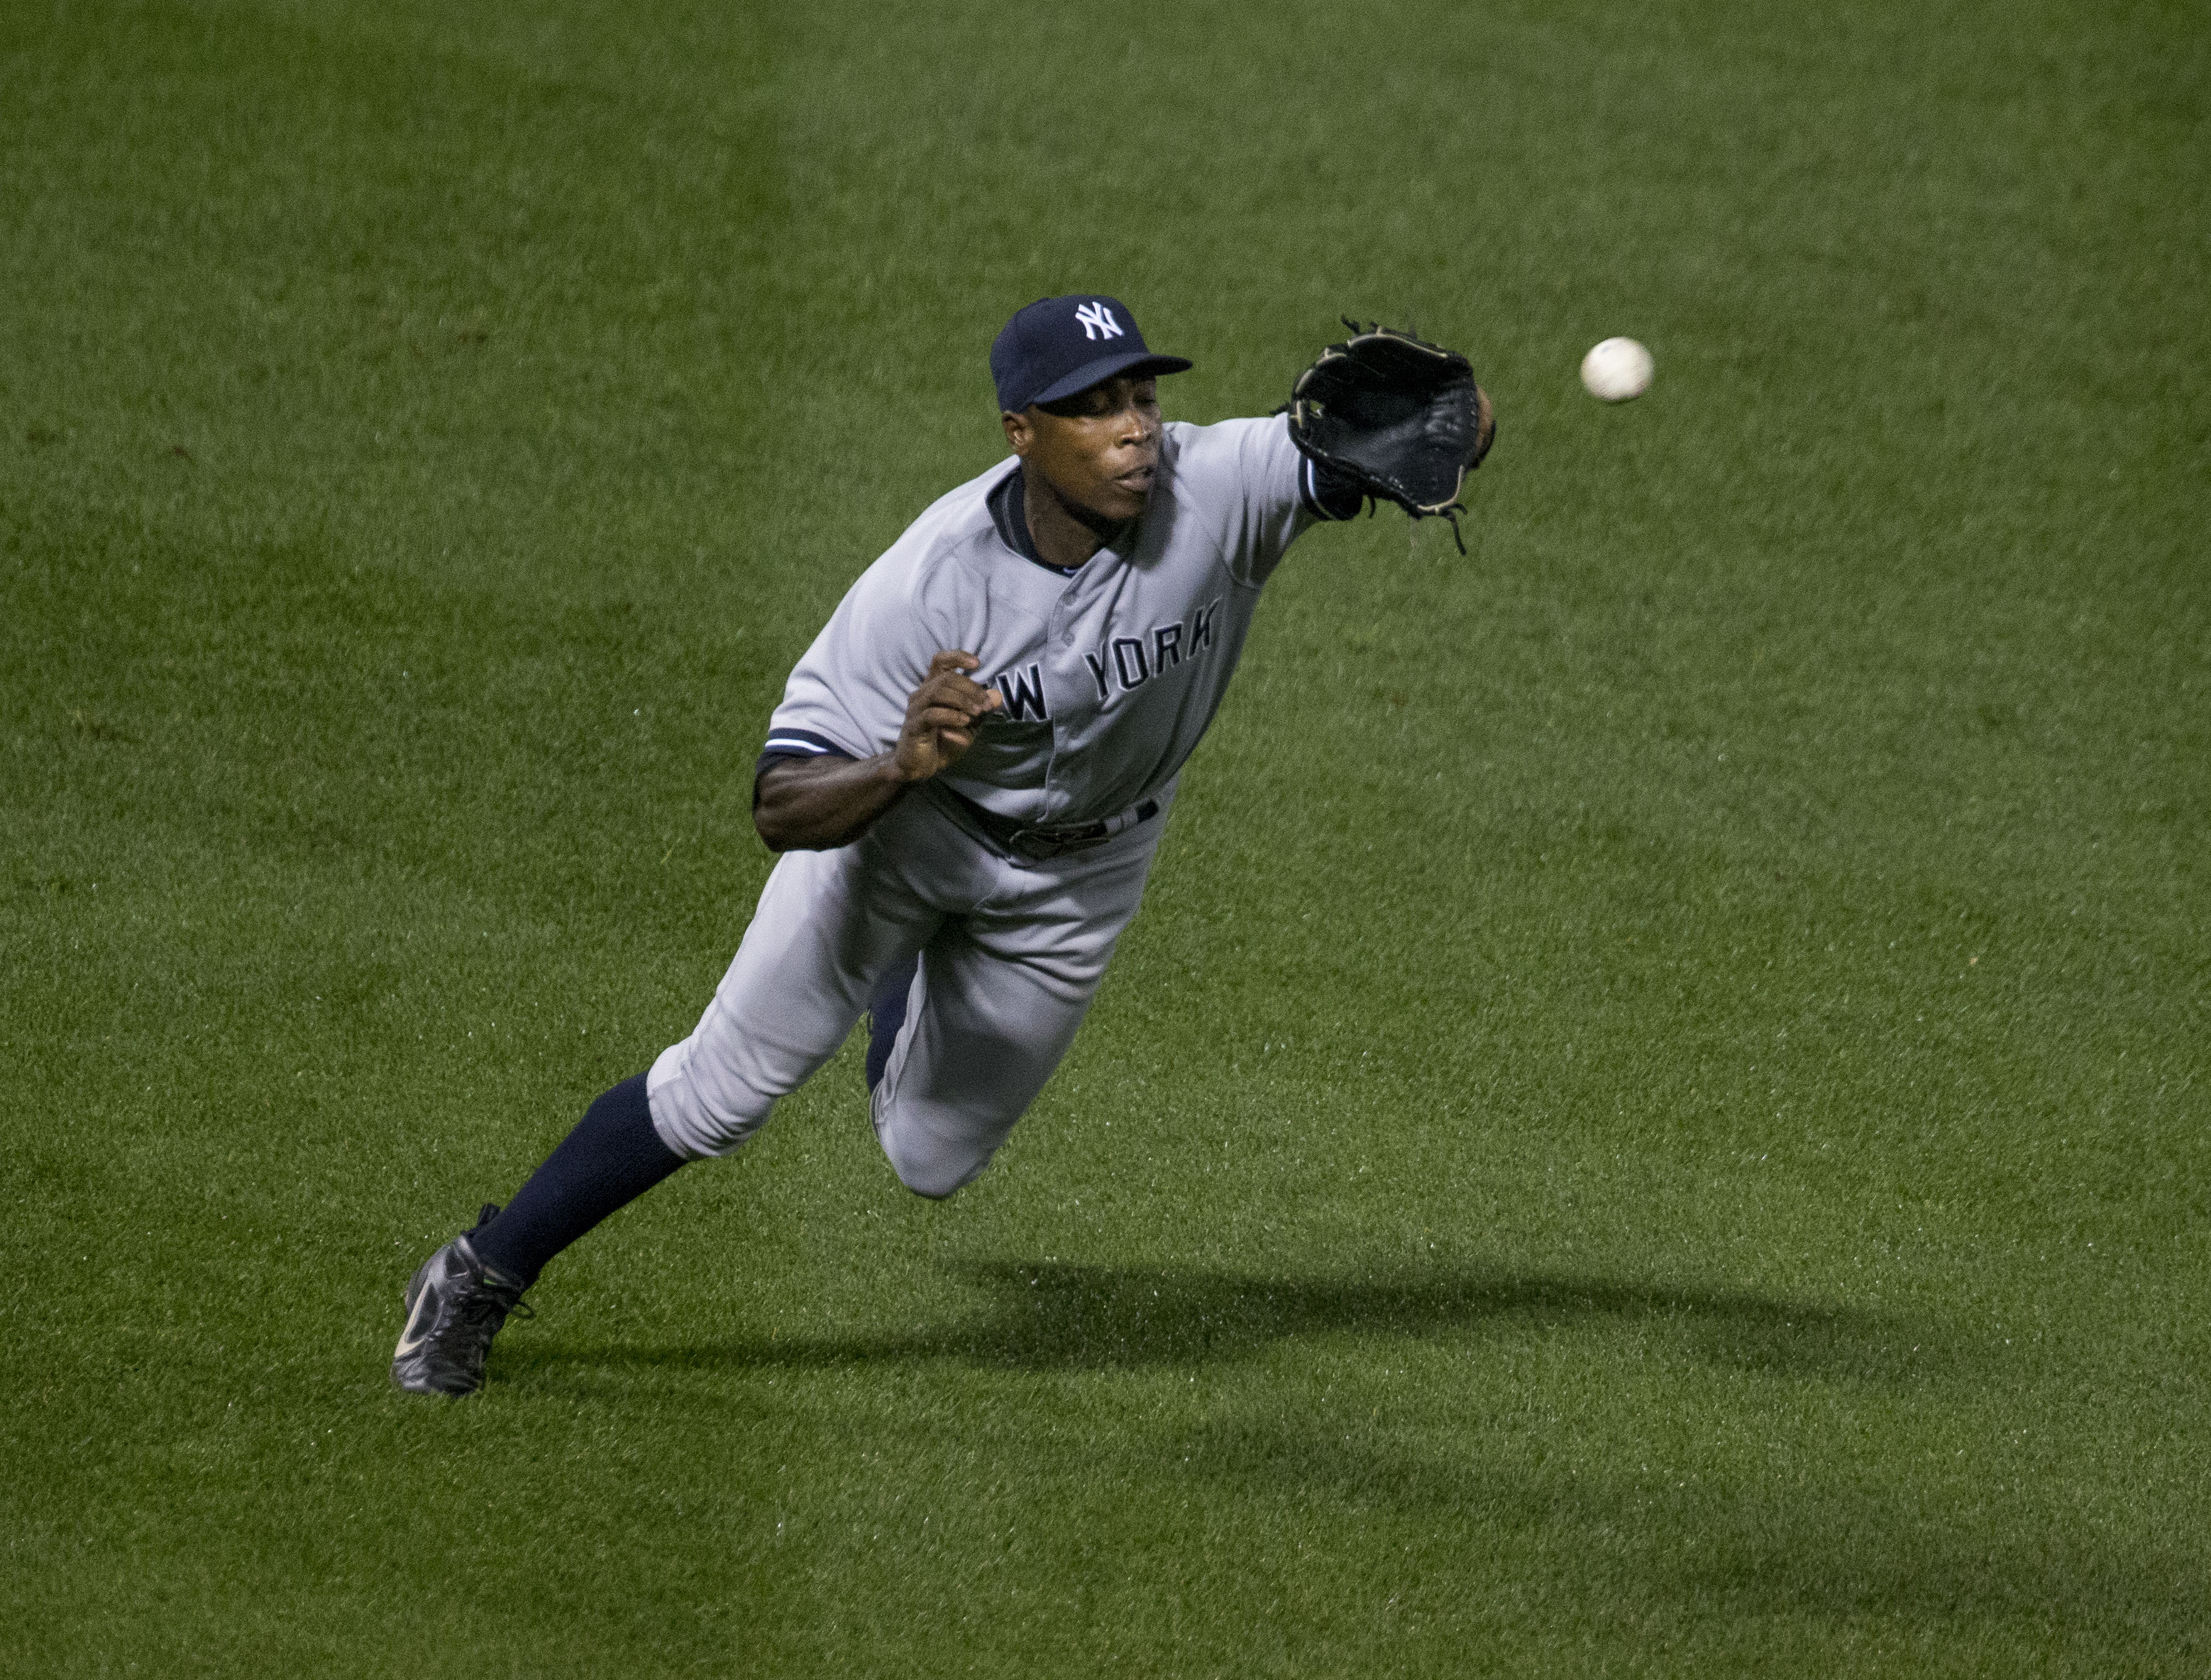 File:Alfonso Soriano - Yankees at Orioles 09 12 13 1.jpg - Wikipedia